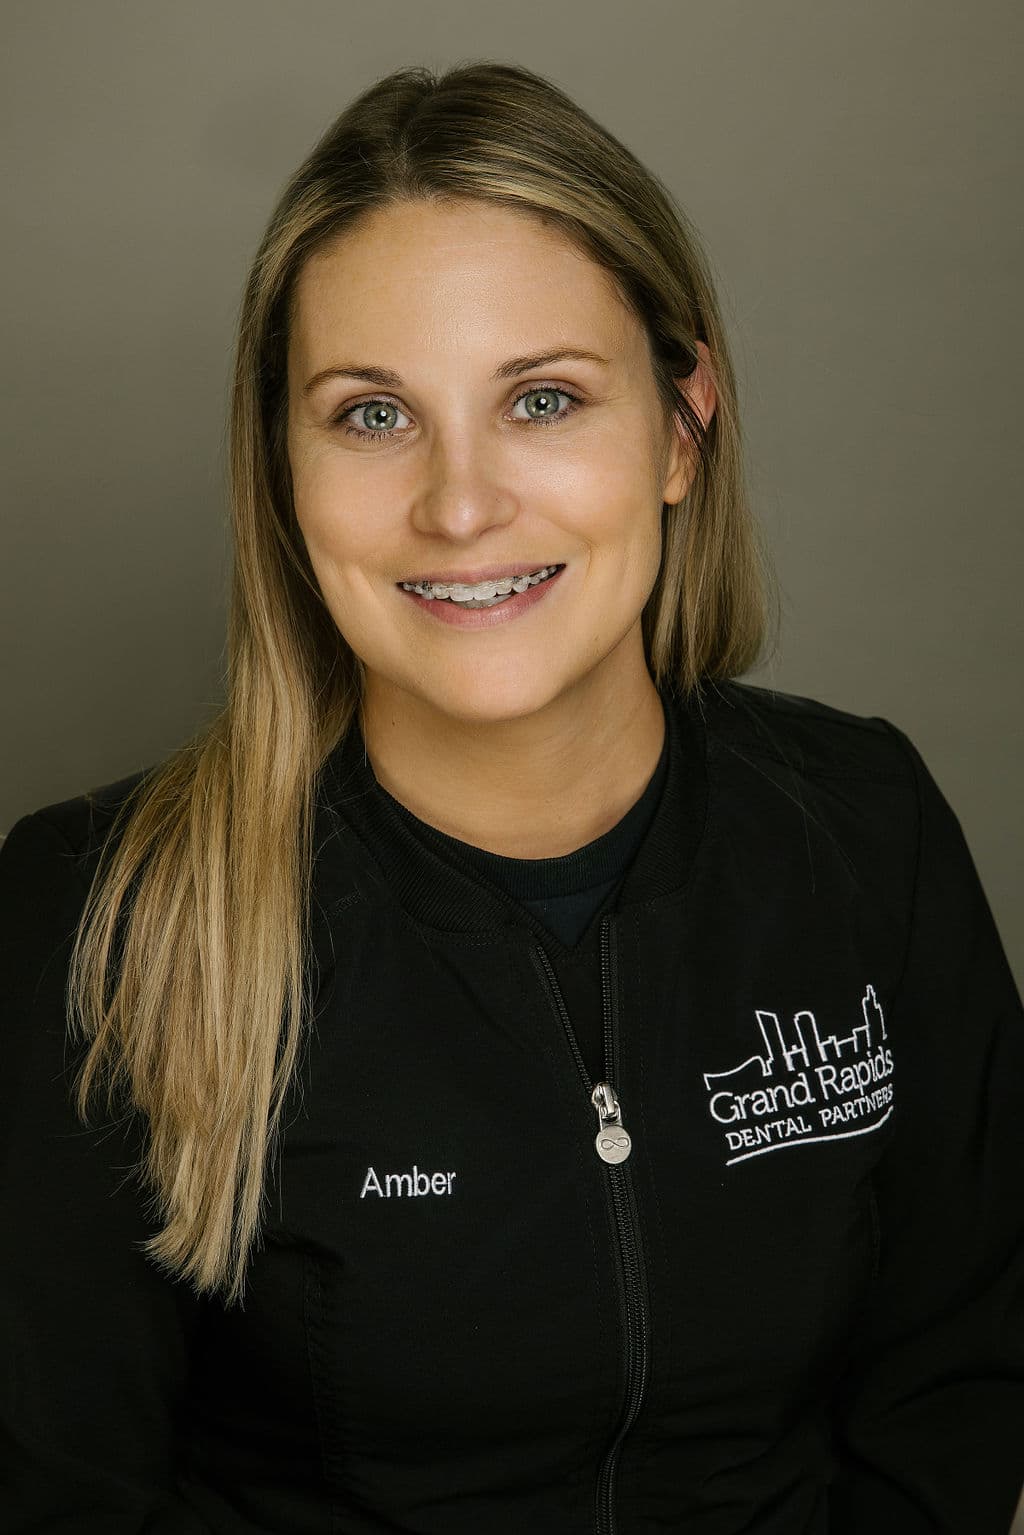 Grand Rapids Dental Partners | Amber, RDH